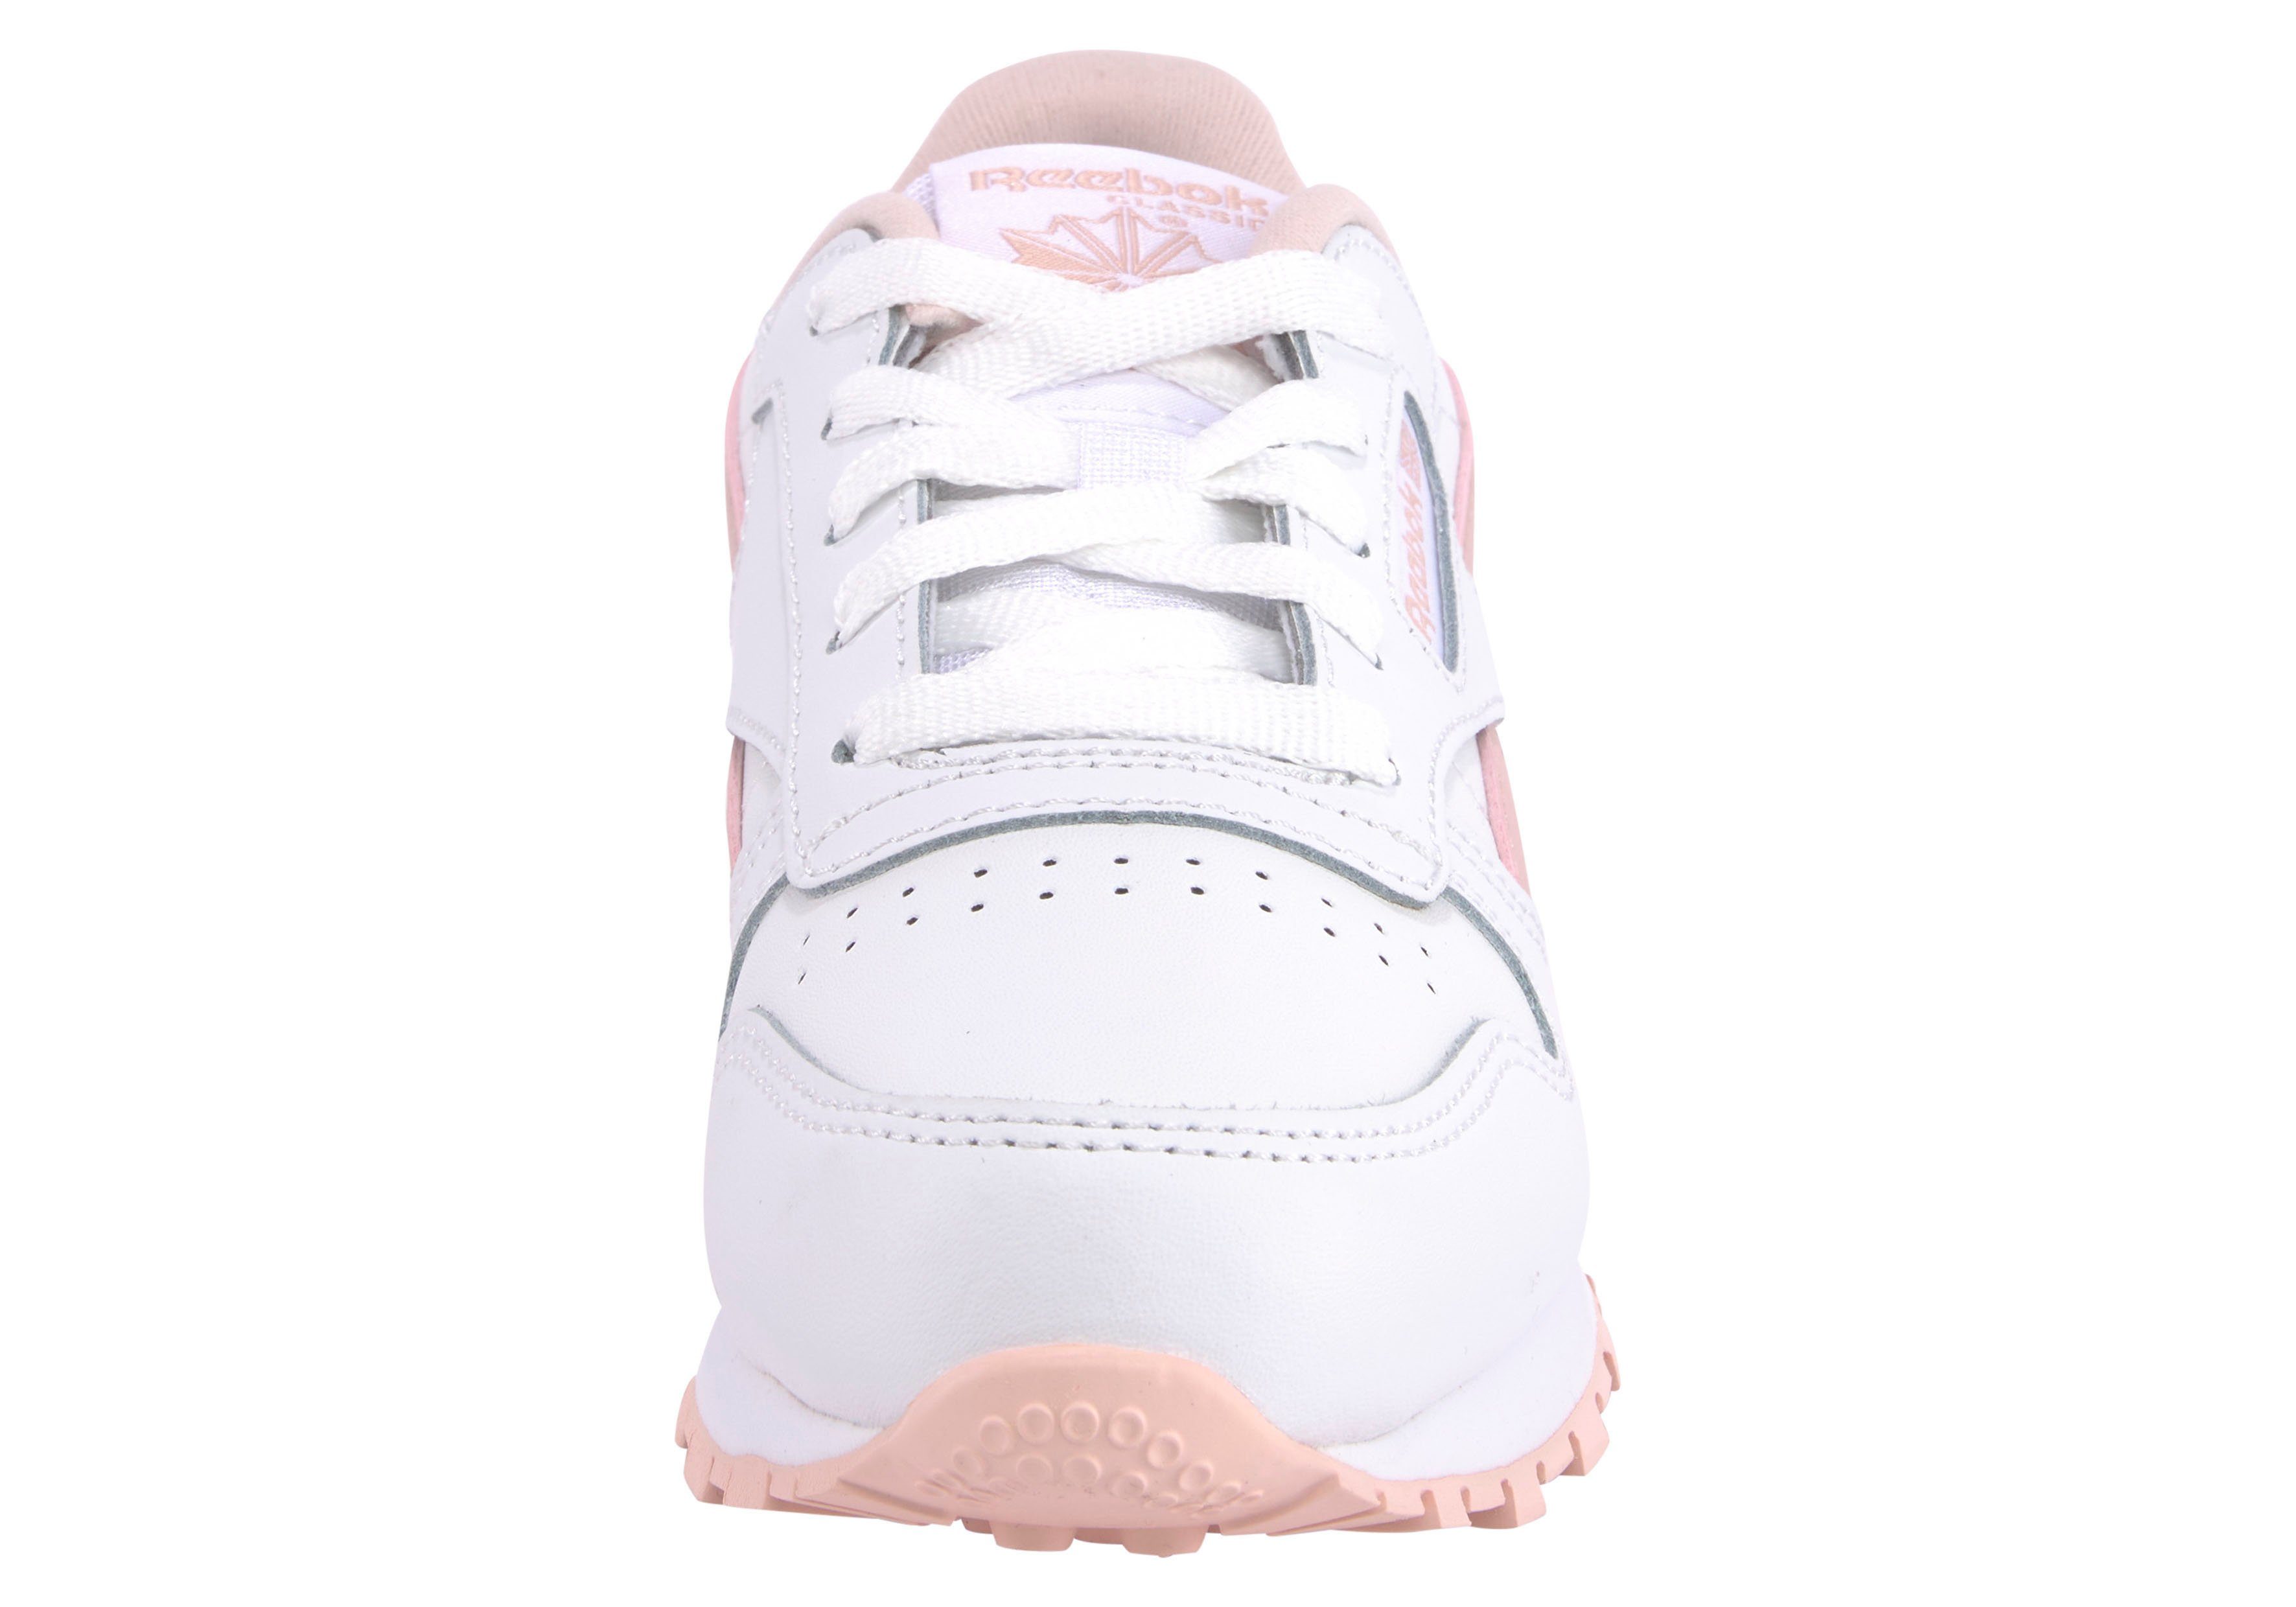 Reebok LEATHER CLASSIC Sneaker weiß-apricot Classic